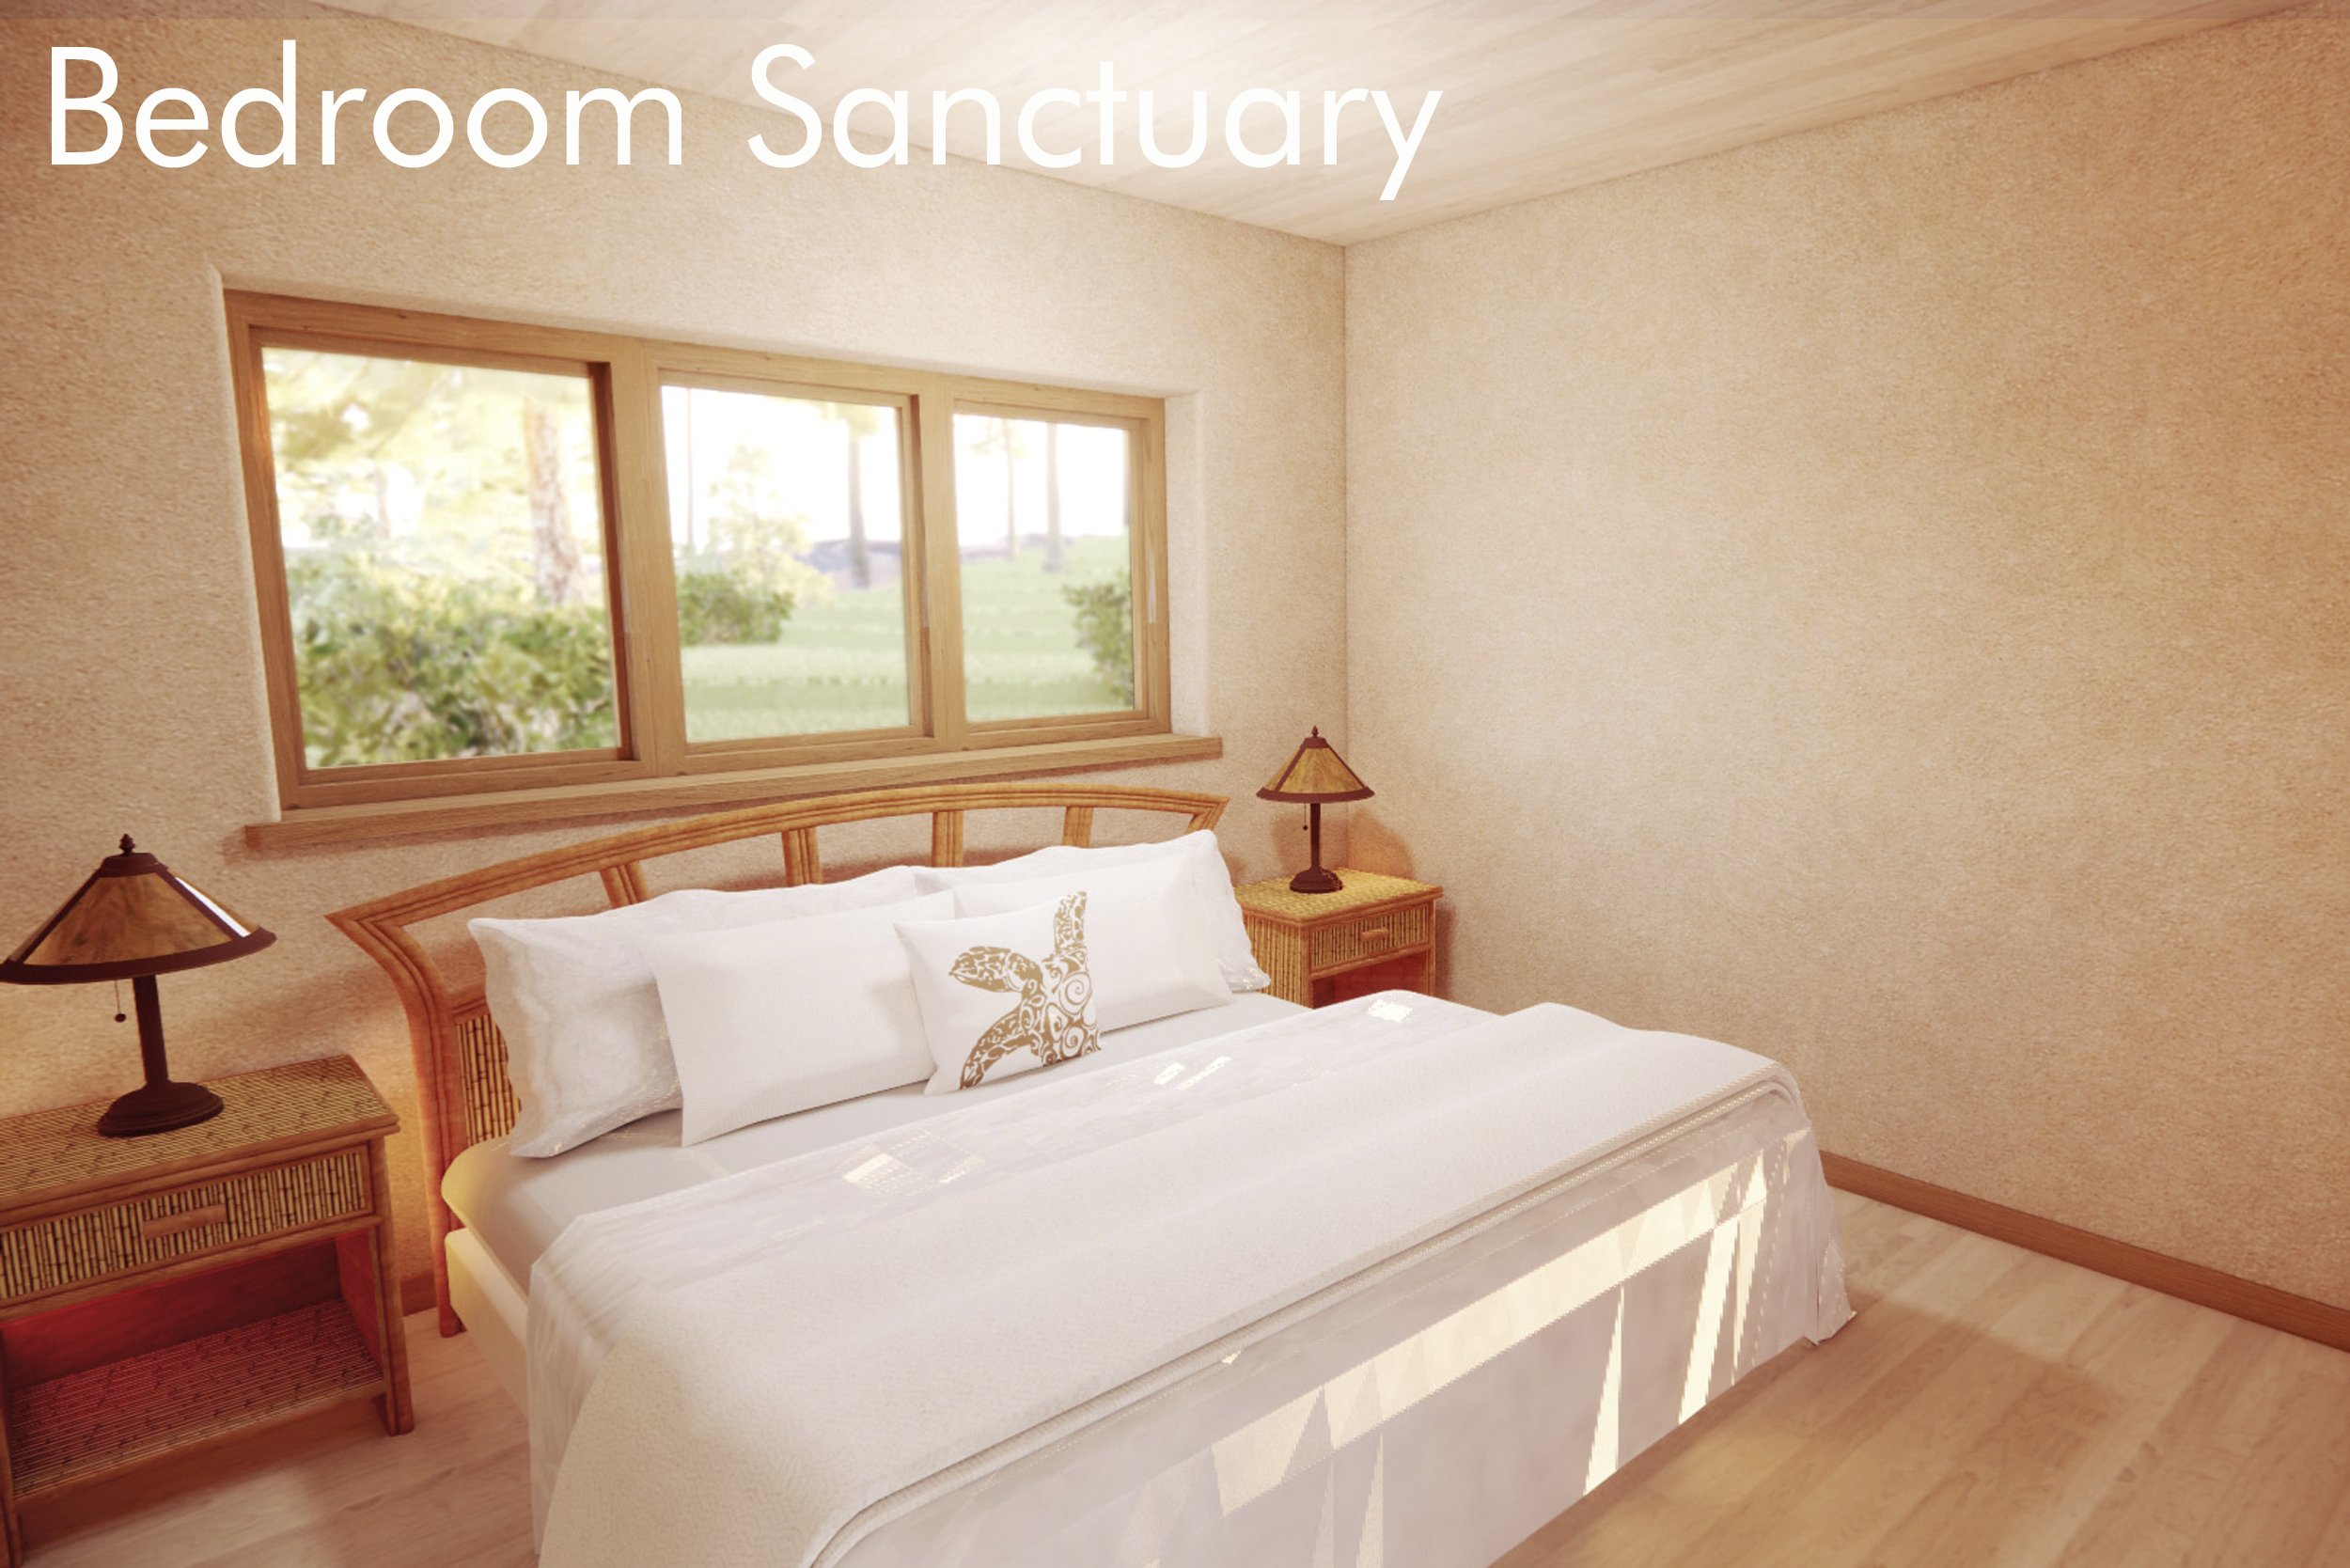 Bedroom sanctuary 2.jpg